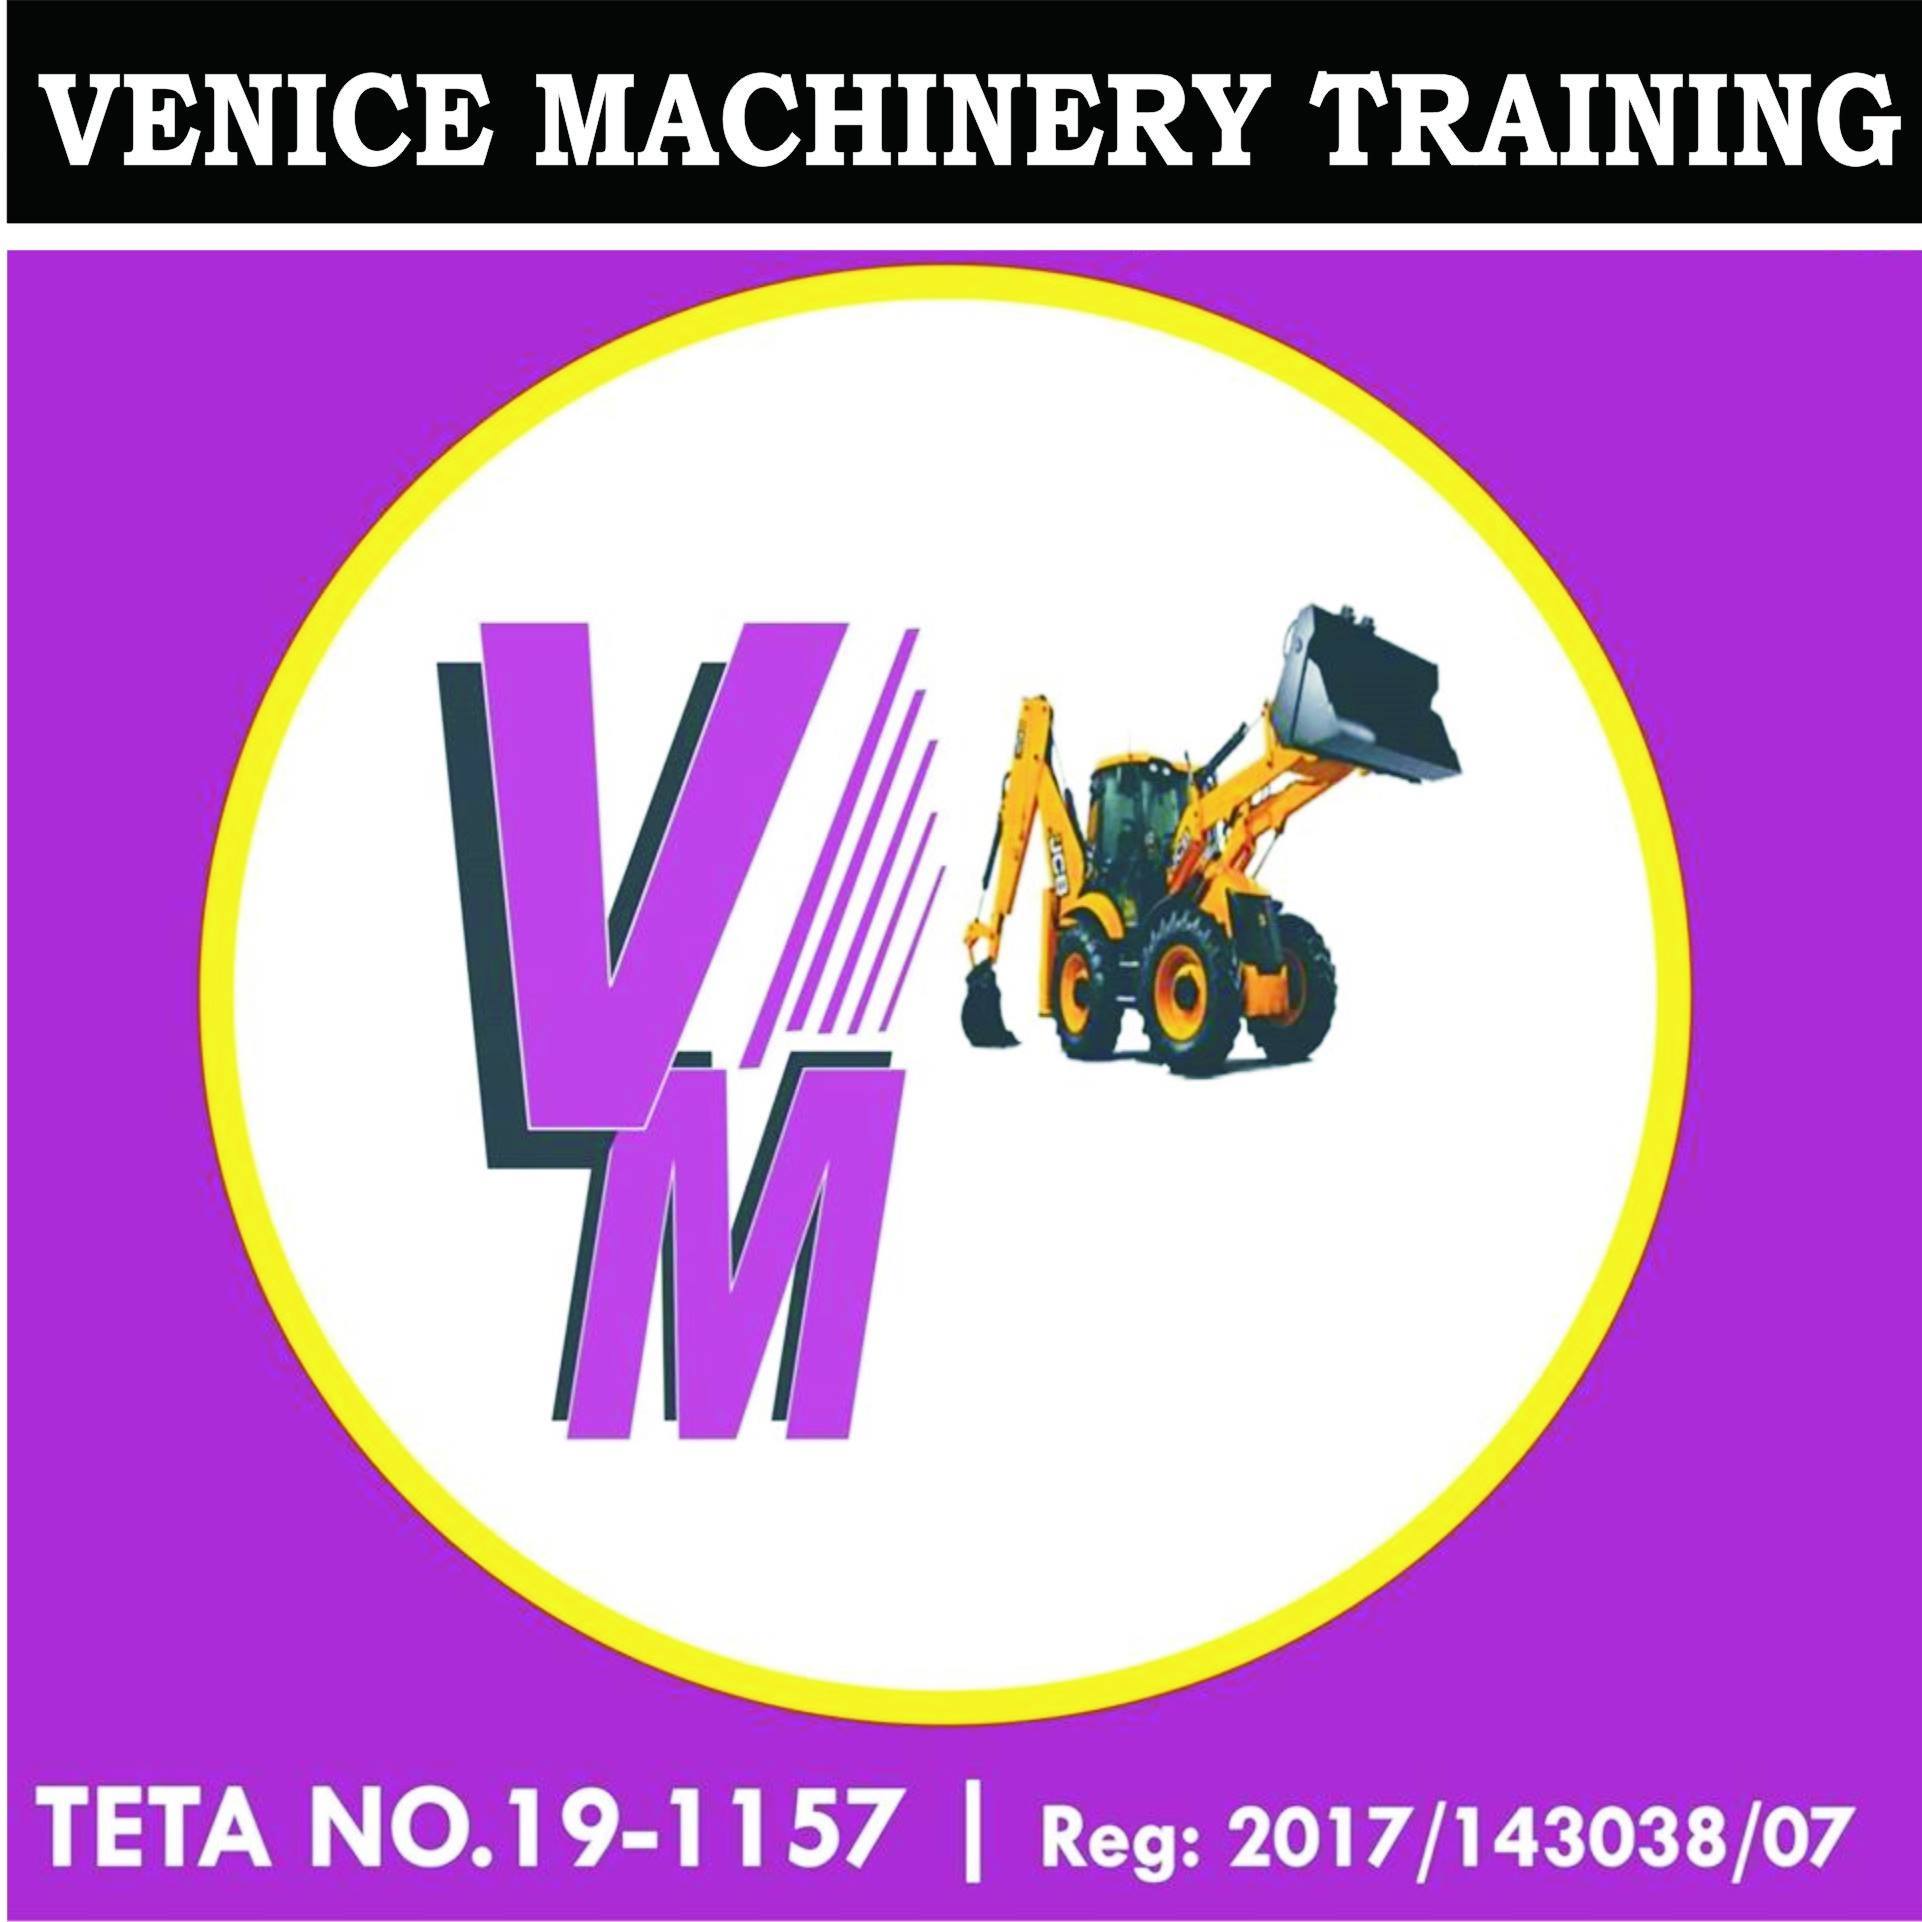 Venice Machinery Training & Trading Logo